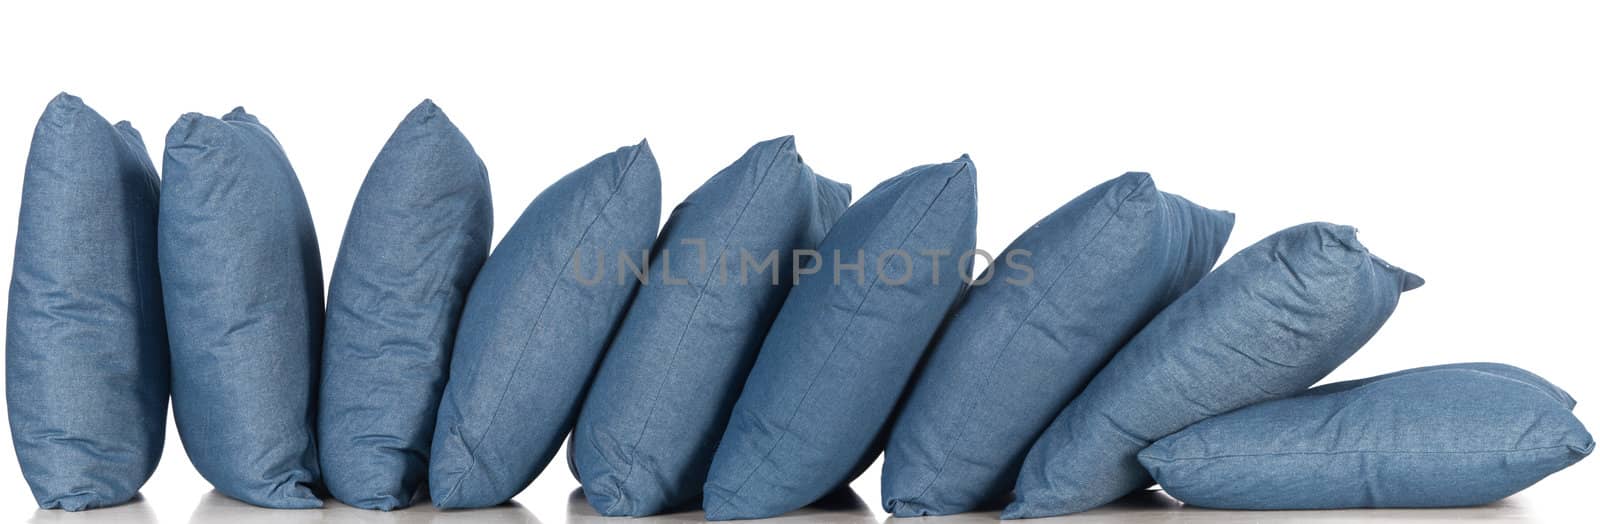 blue denim pillows by VictorO